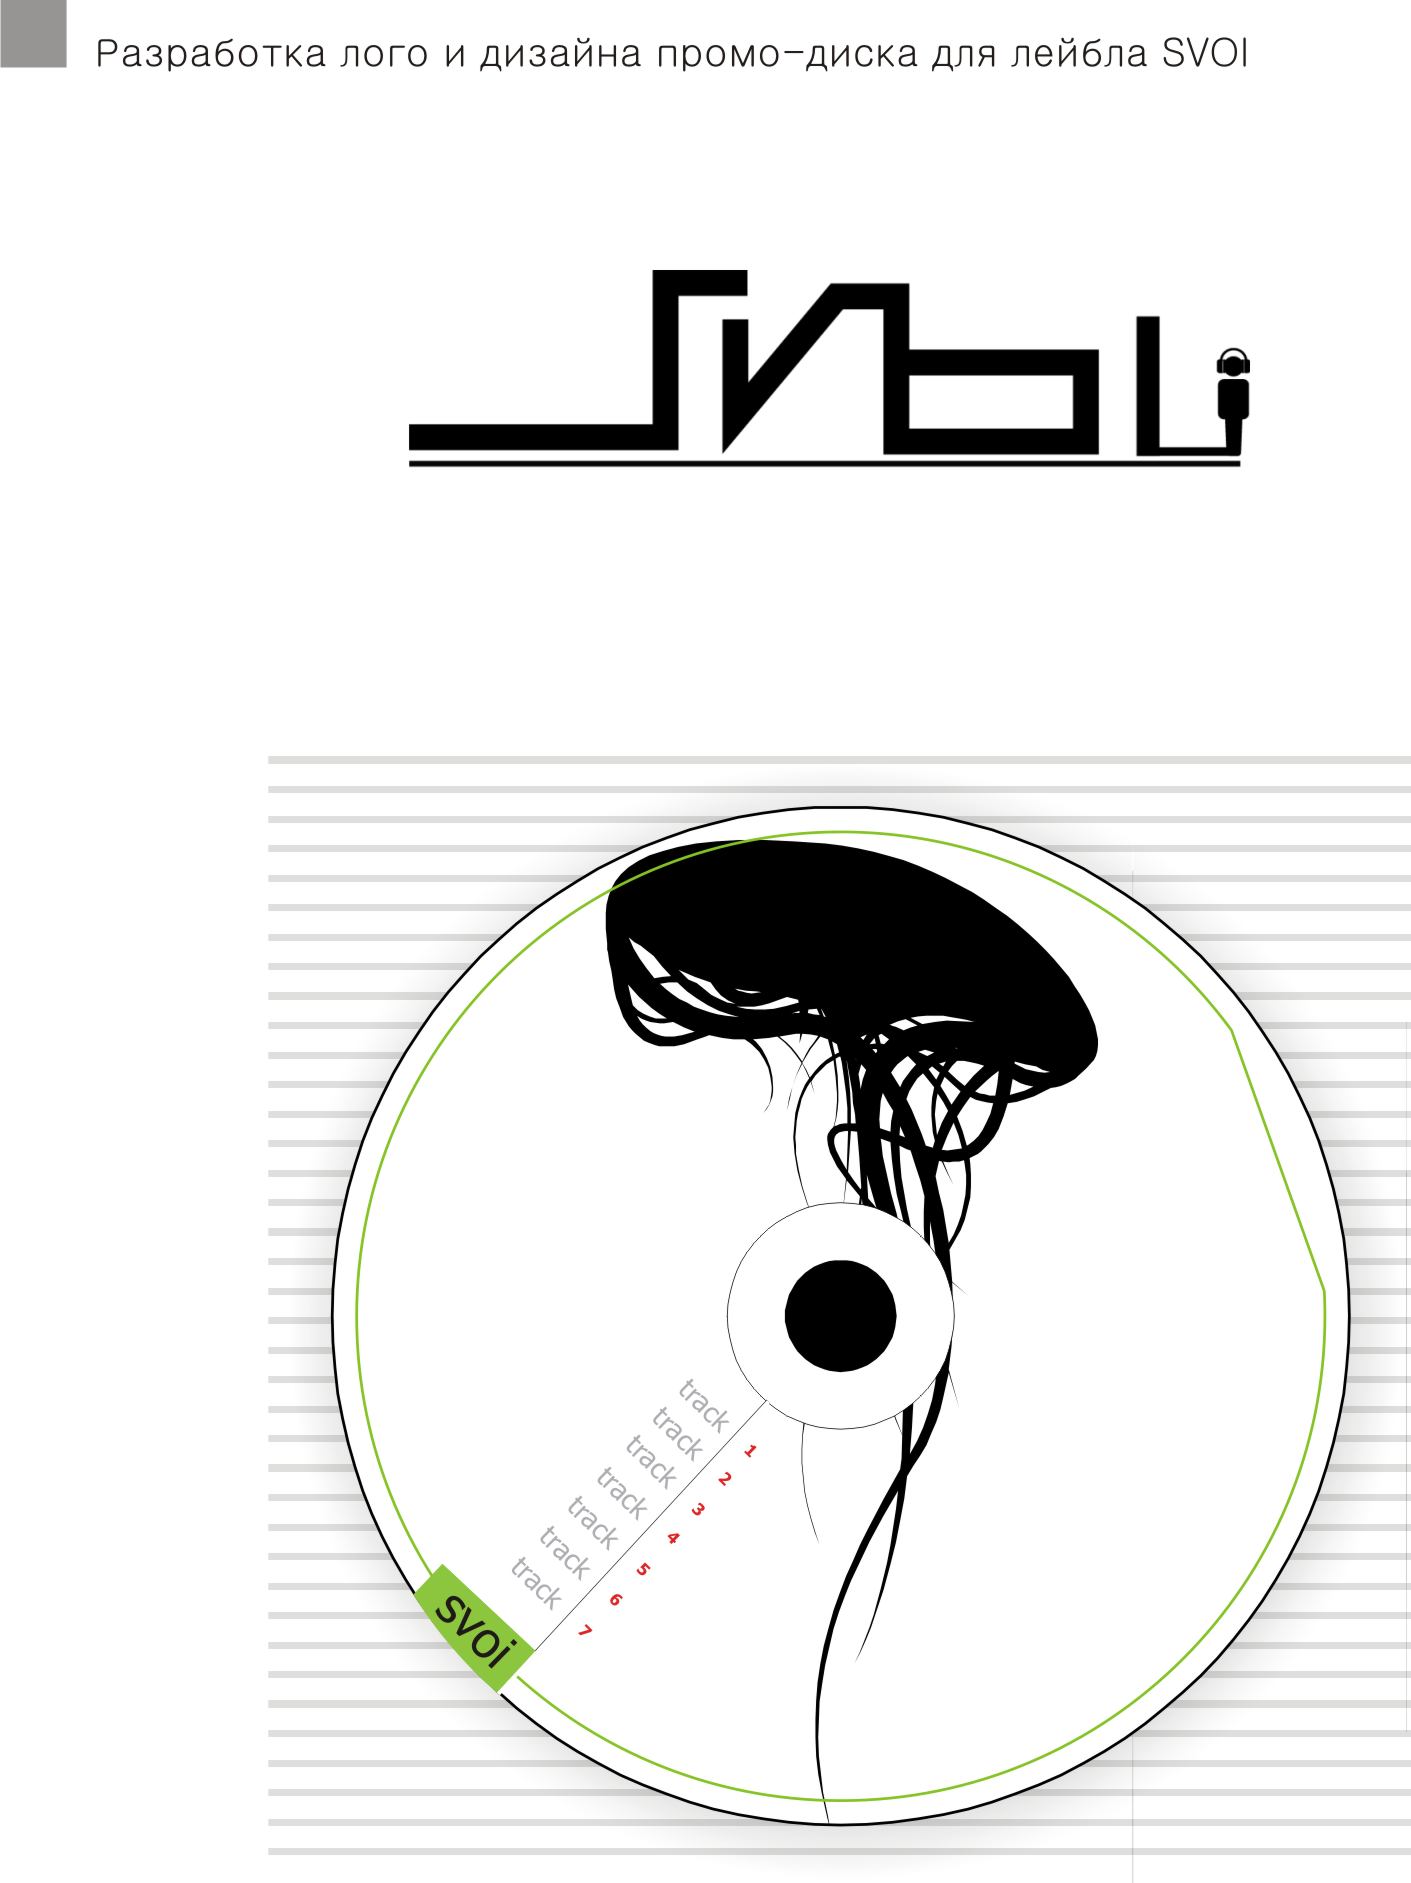 logo &amp; promo-disk, туда же